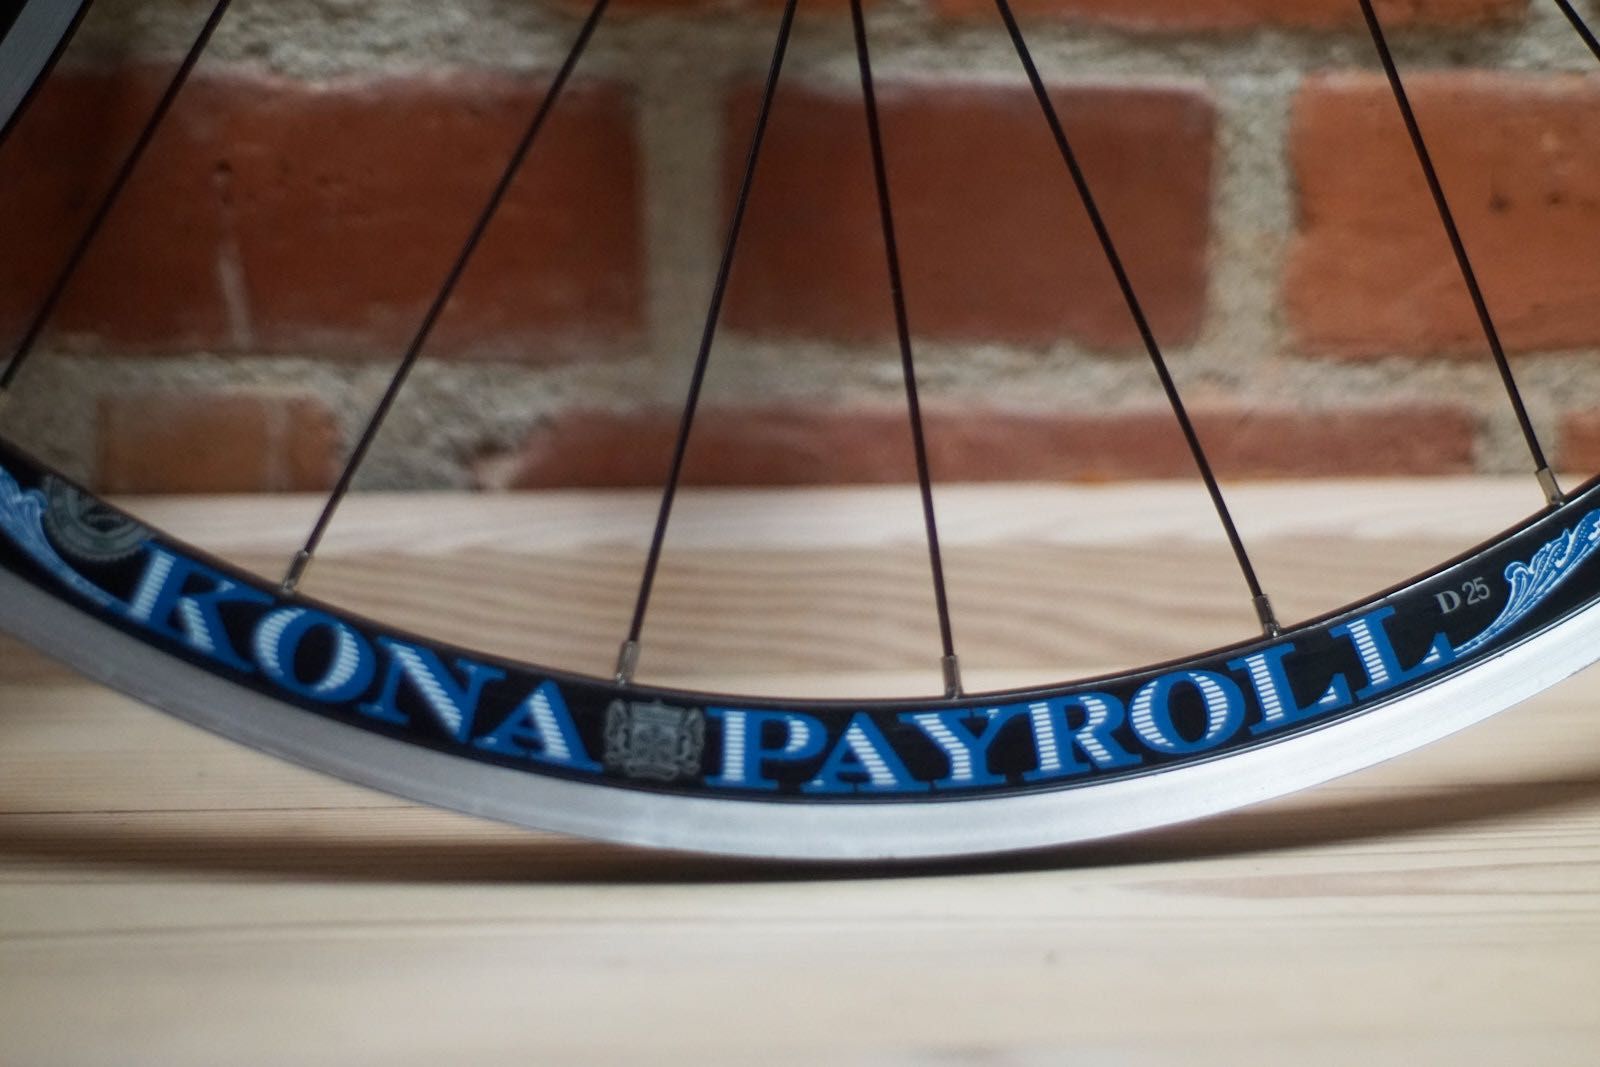 Kona Payroll koła nowe nos Honky / gravel bikepacking cx urban